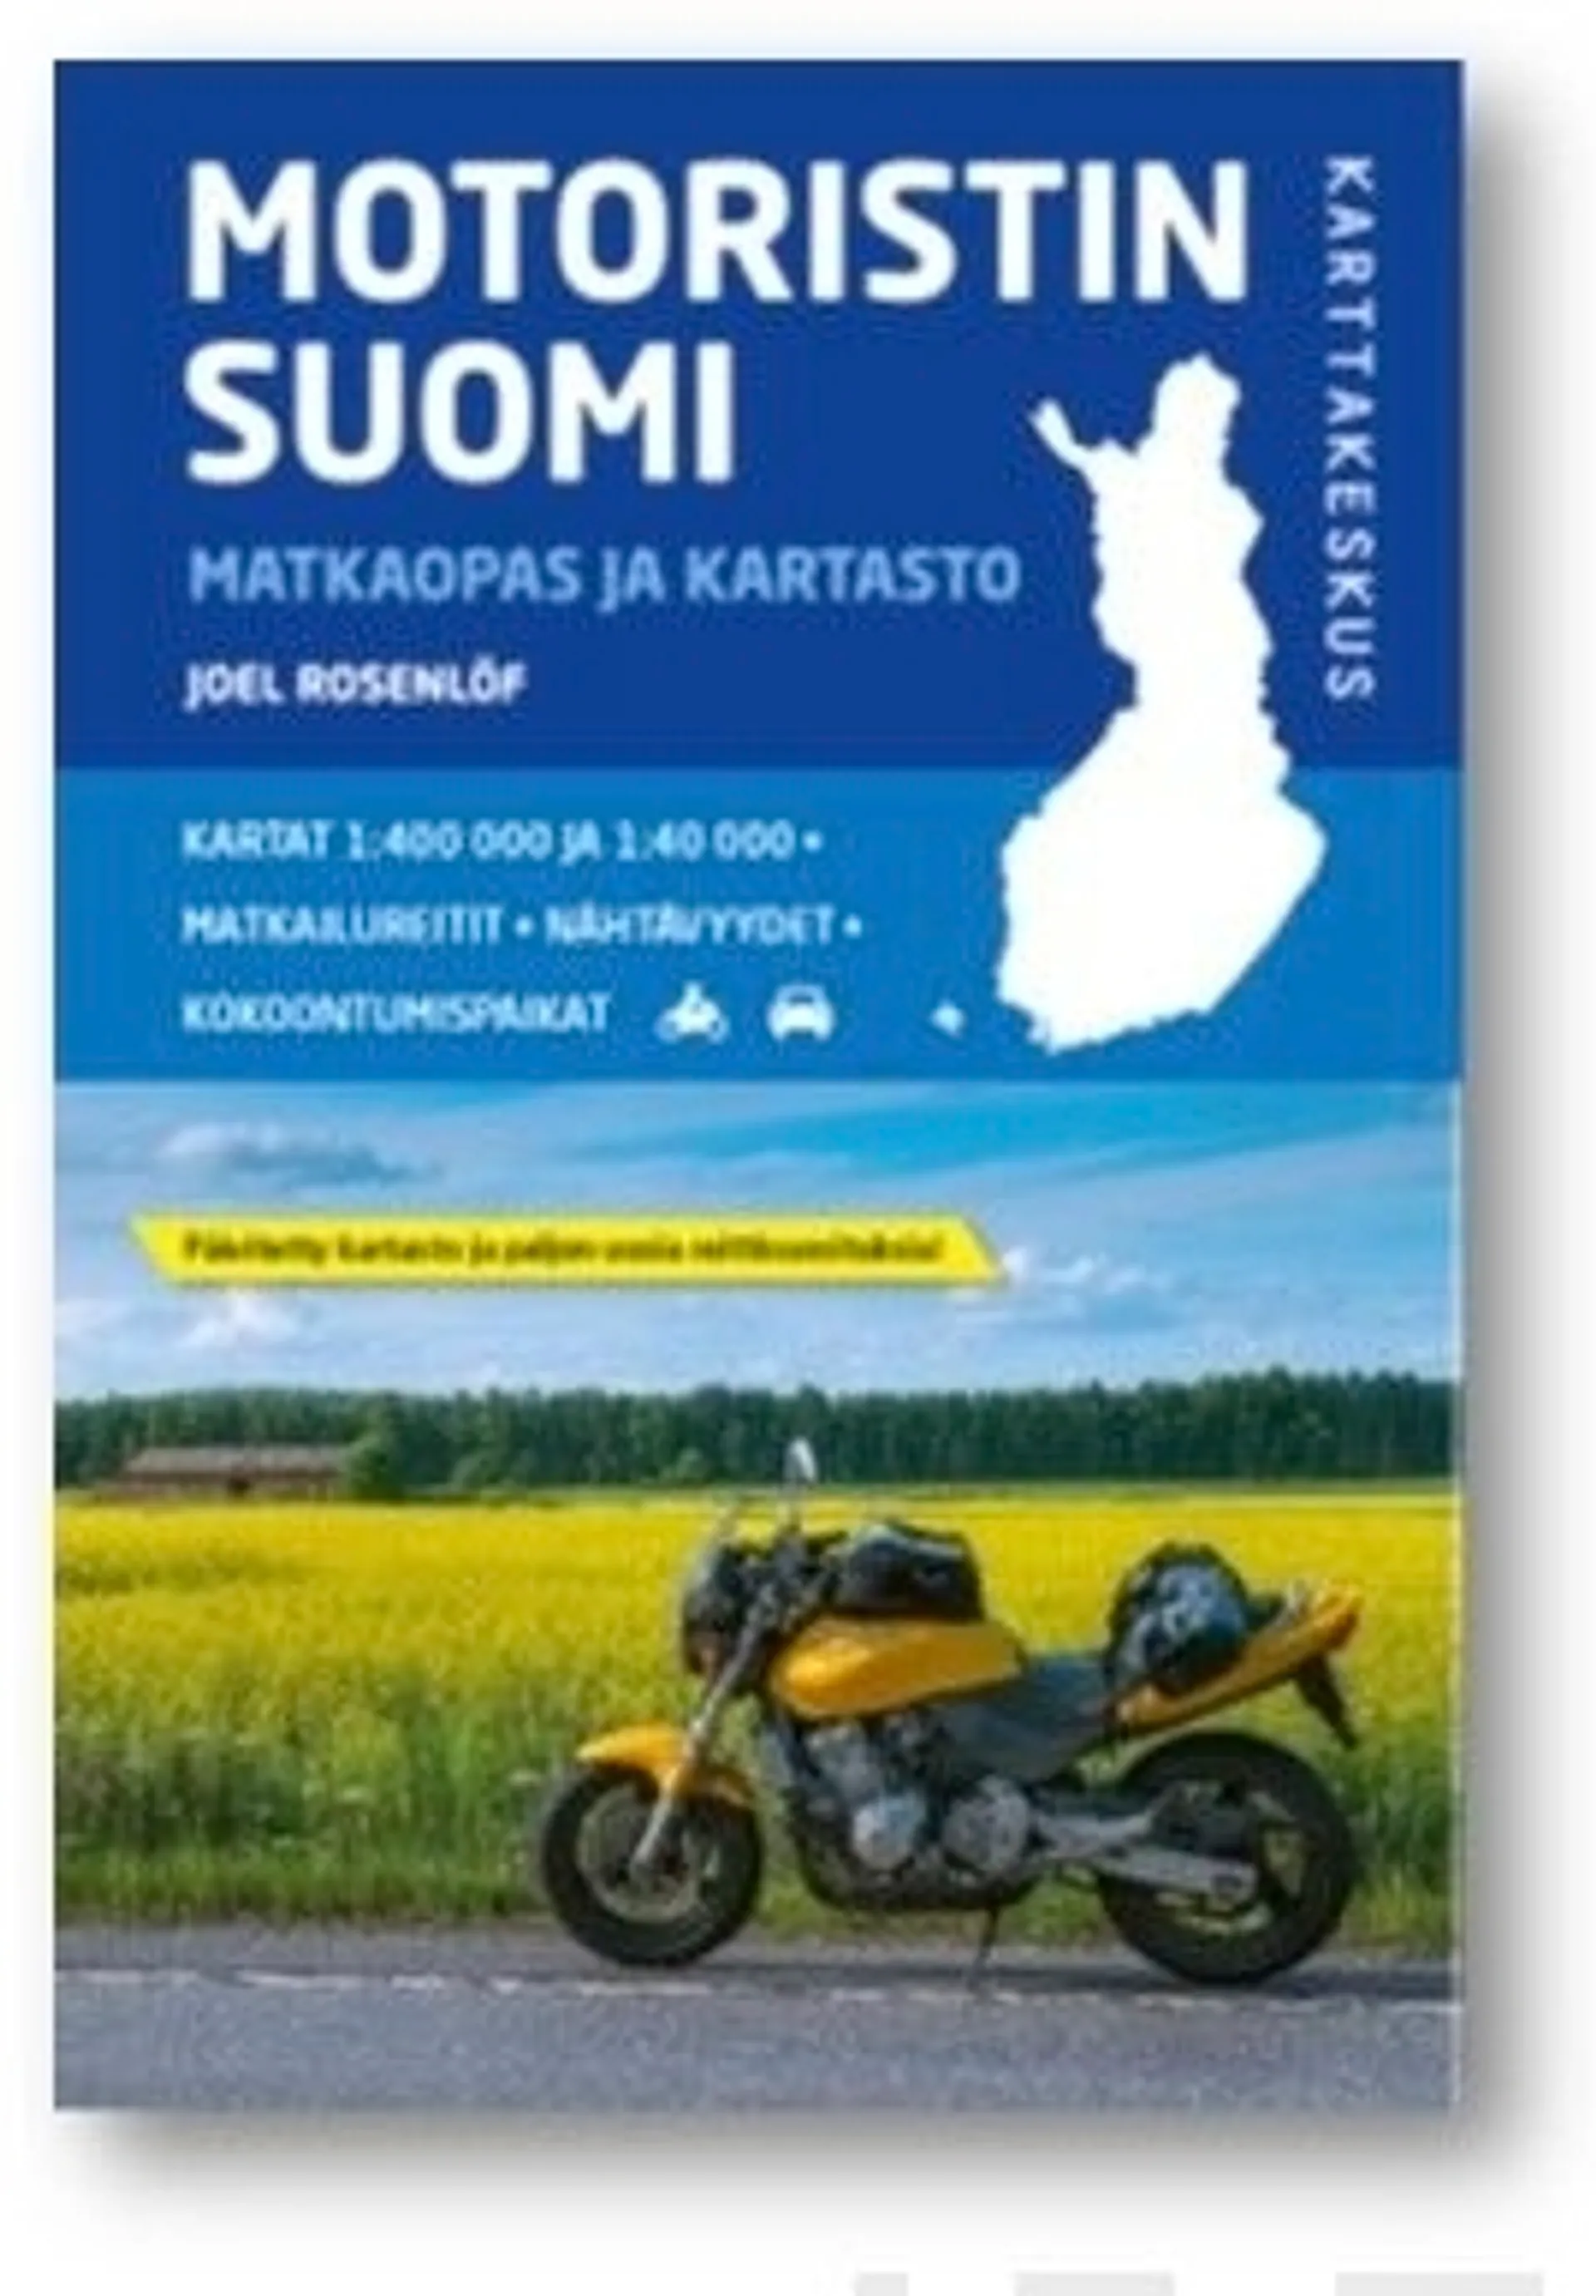 Motoristin Suomi 2018 1:400 000/1:40 000